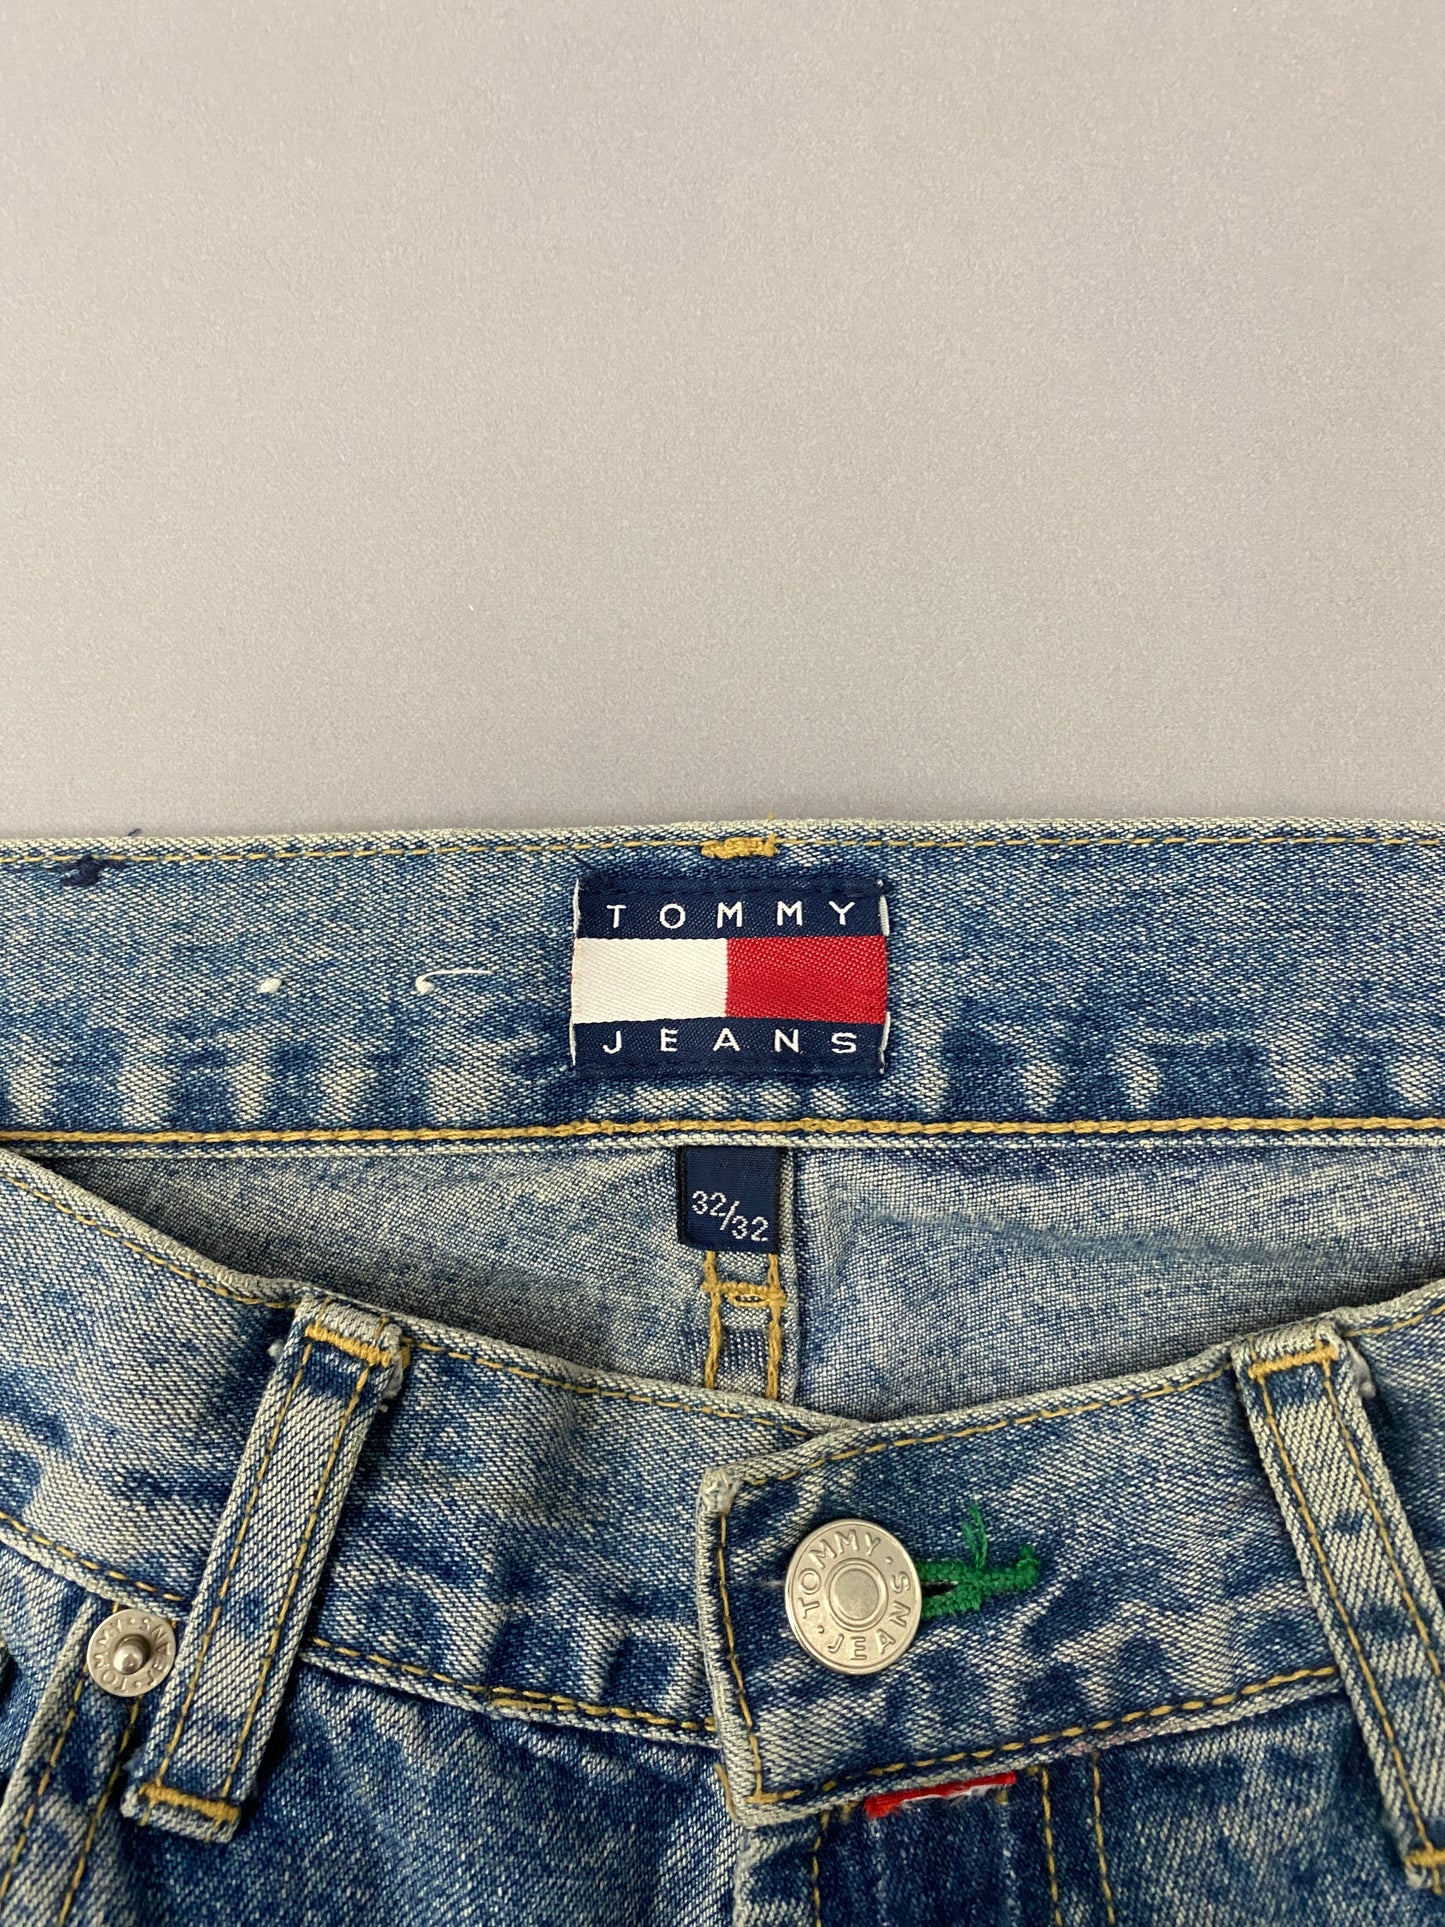 Vintage Tommy Jeans - 32 x 32